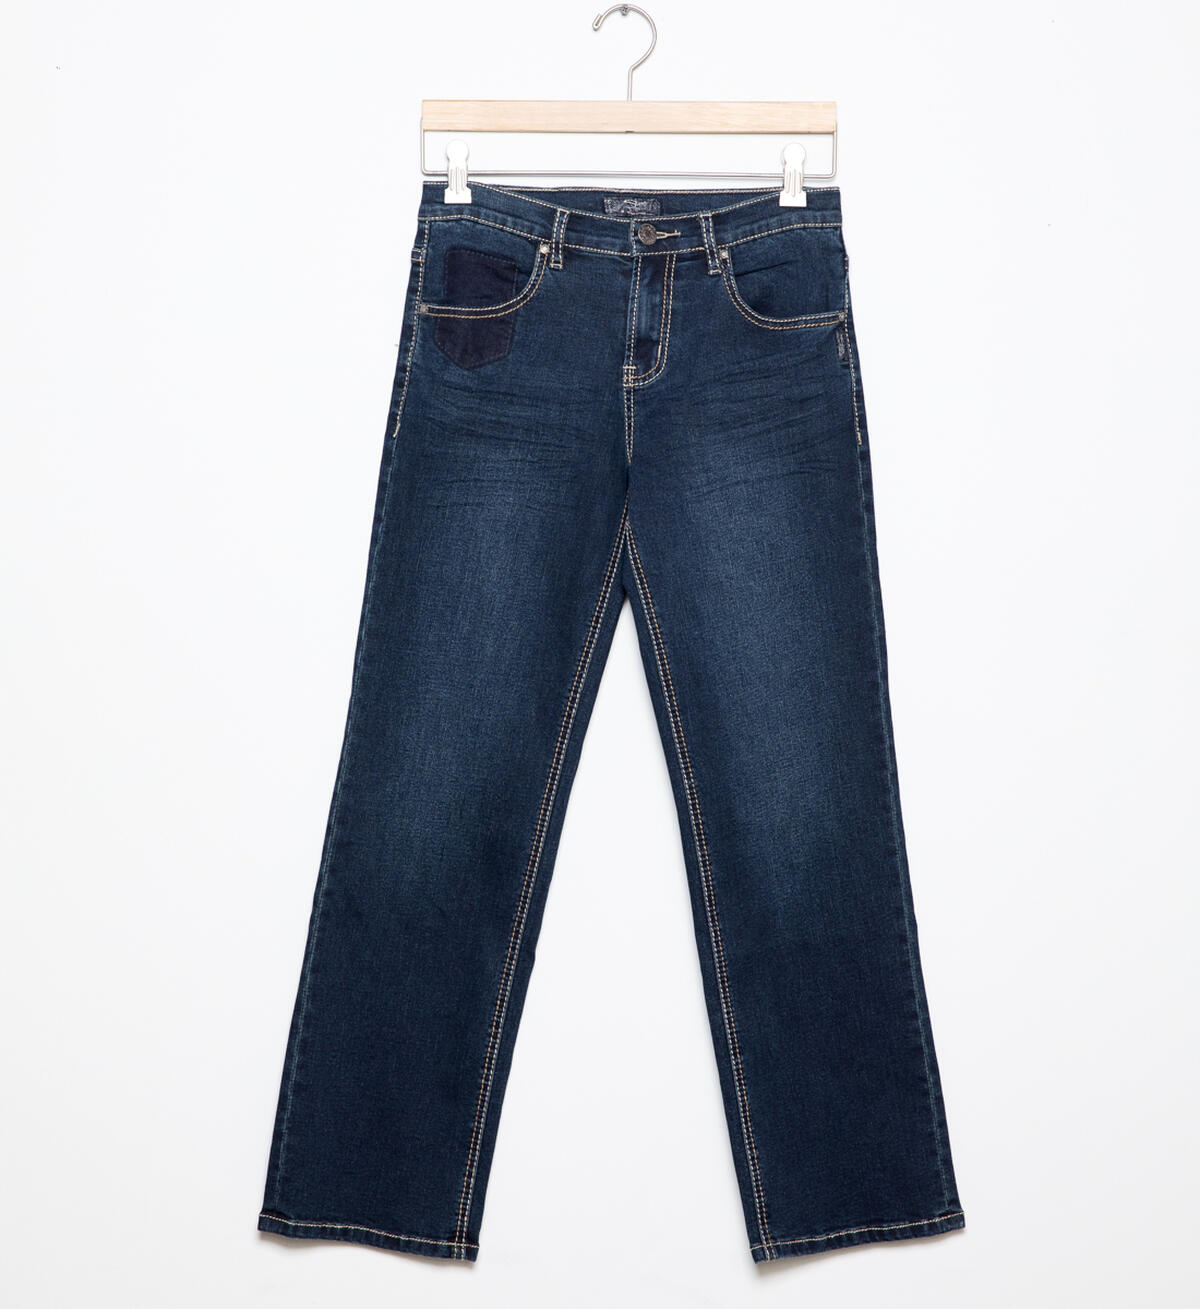 Garrett Loose-Fit Jeans in Dark Wash (7-16), , hi-res image number 0